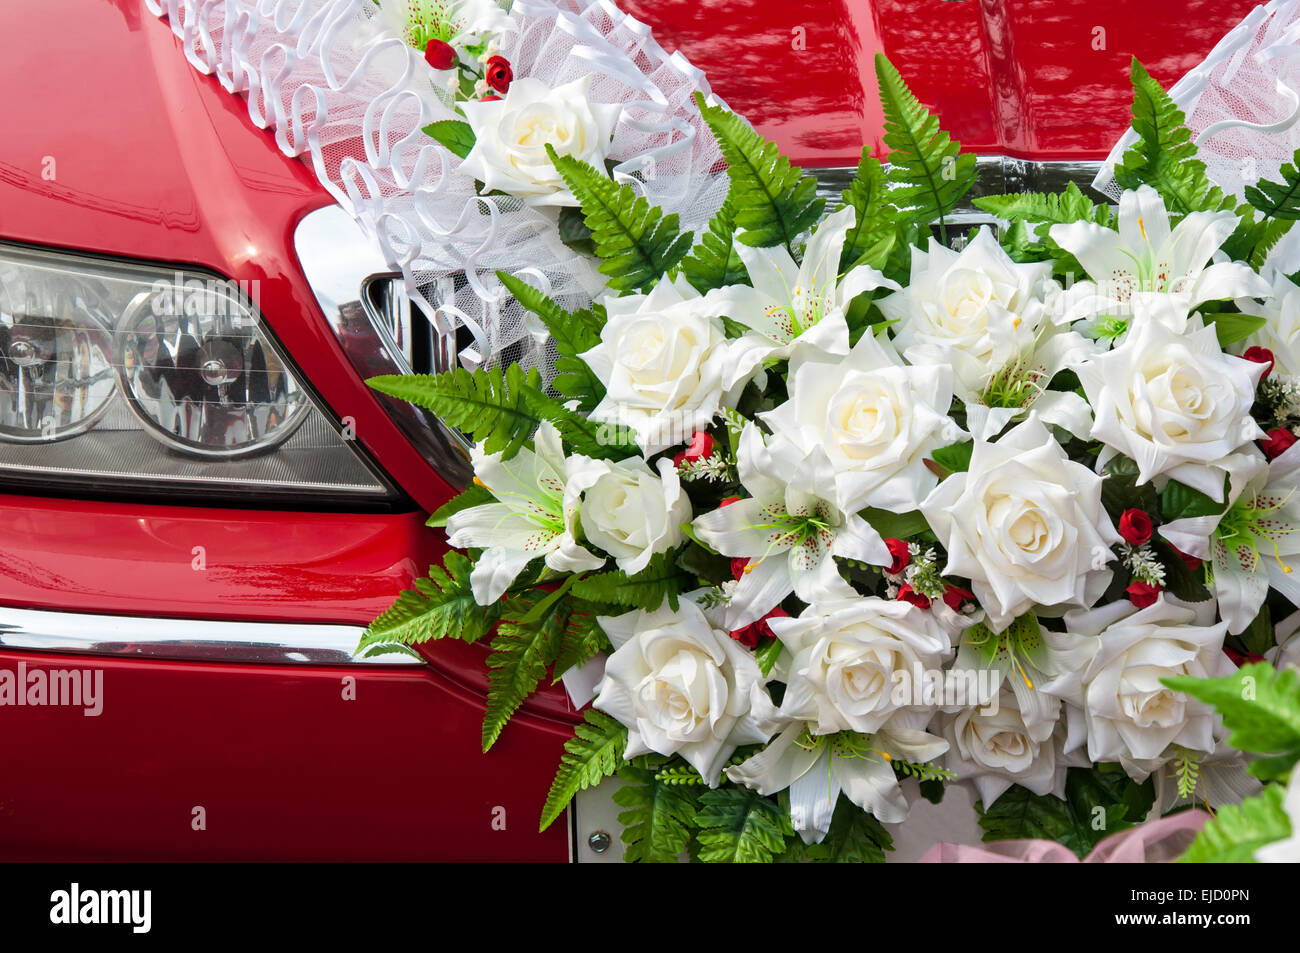 https://c8.alamy.com/comp/EJD0PN/wedding-car-flowers-decoration-among-the-many-decorations-of-the-car-EJD0PN.jpg